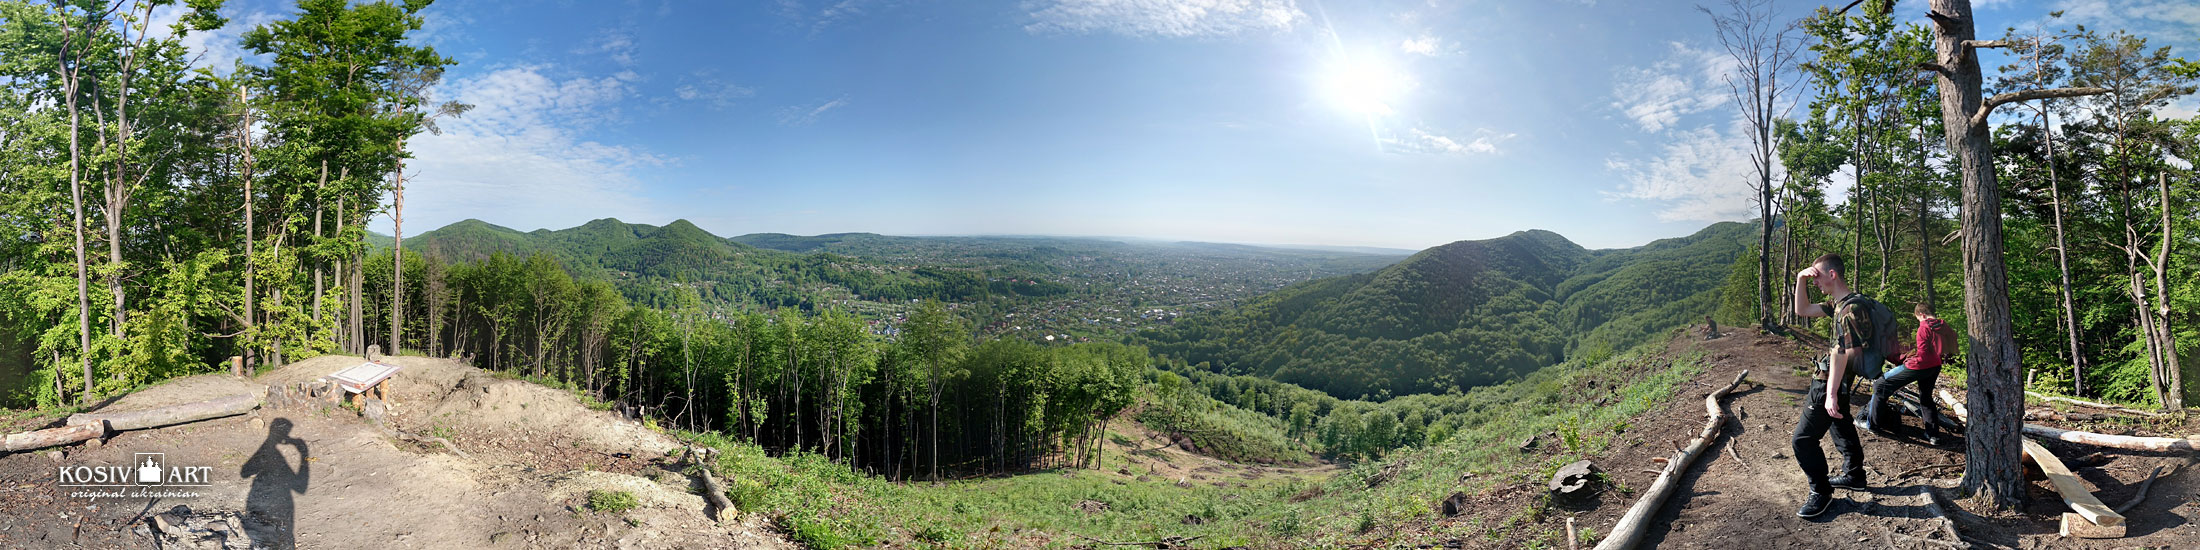 Kosiv view from Ostryj